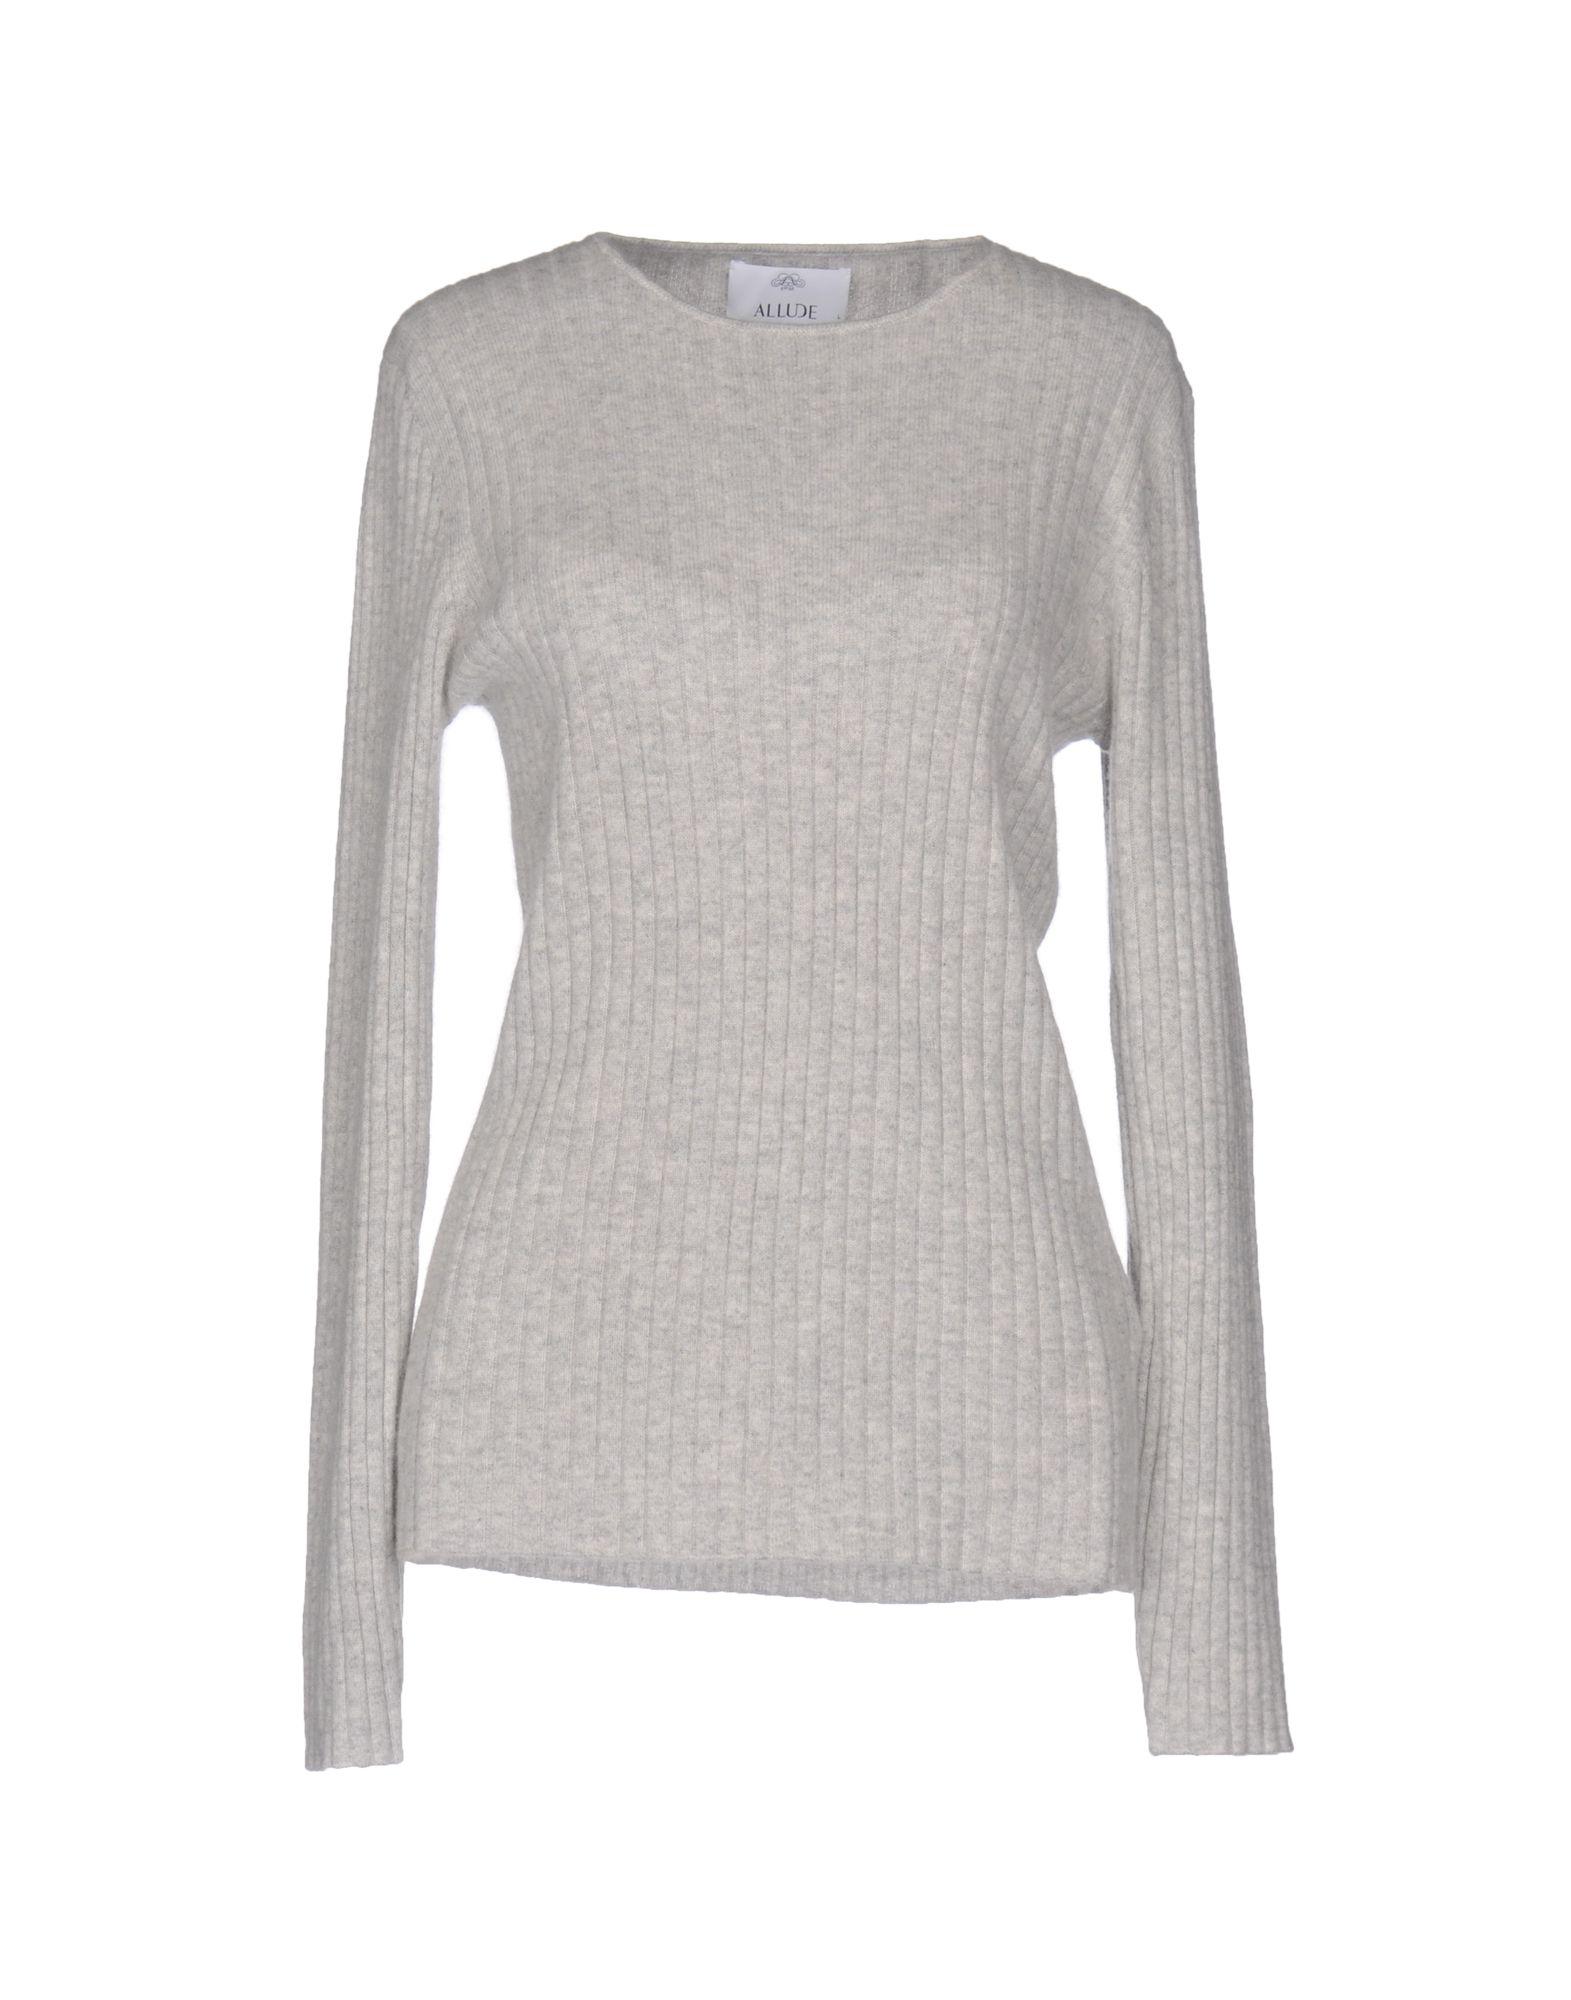 Lyst - Allude Sweater in Gray